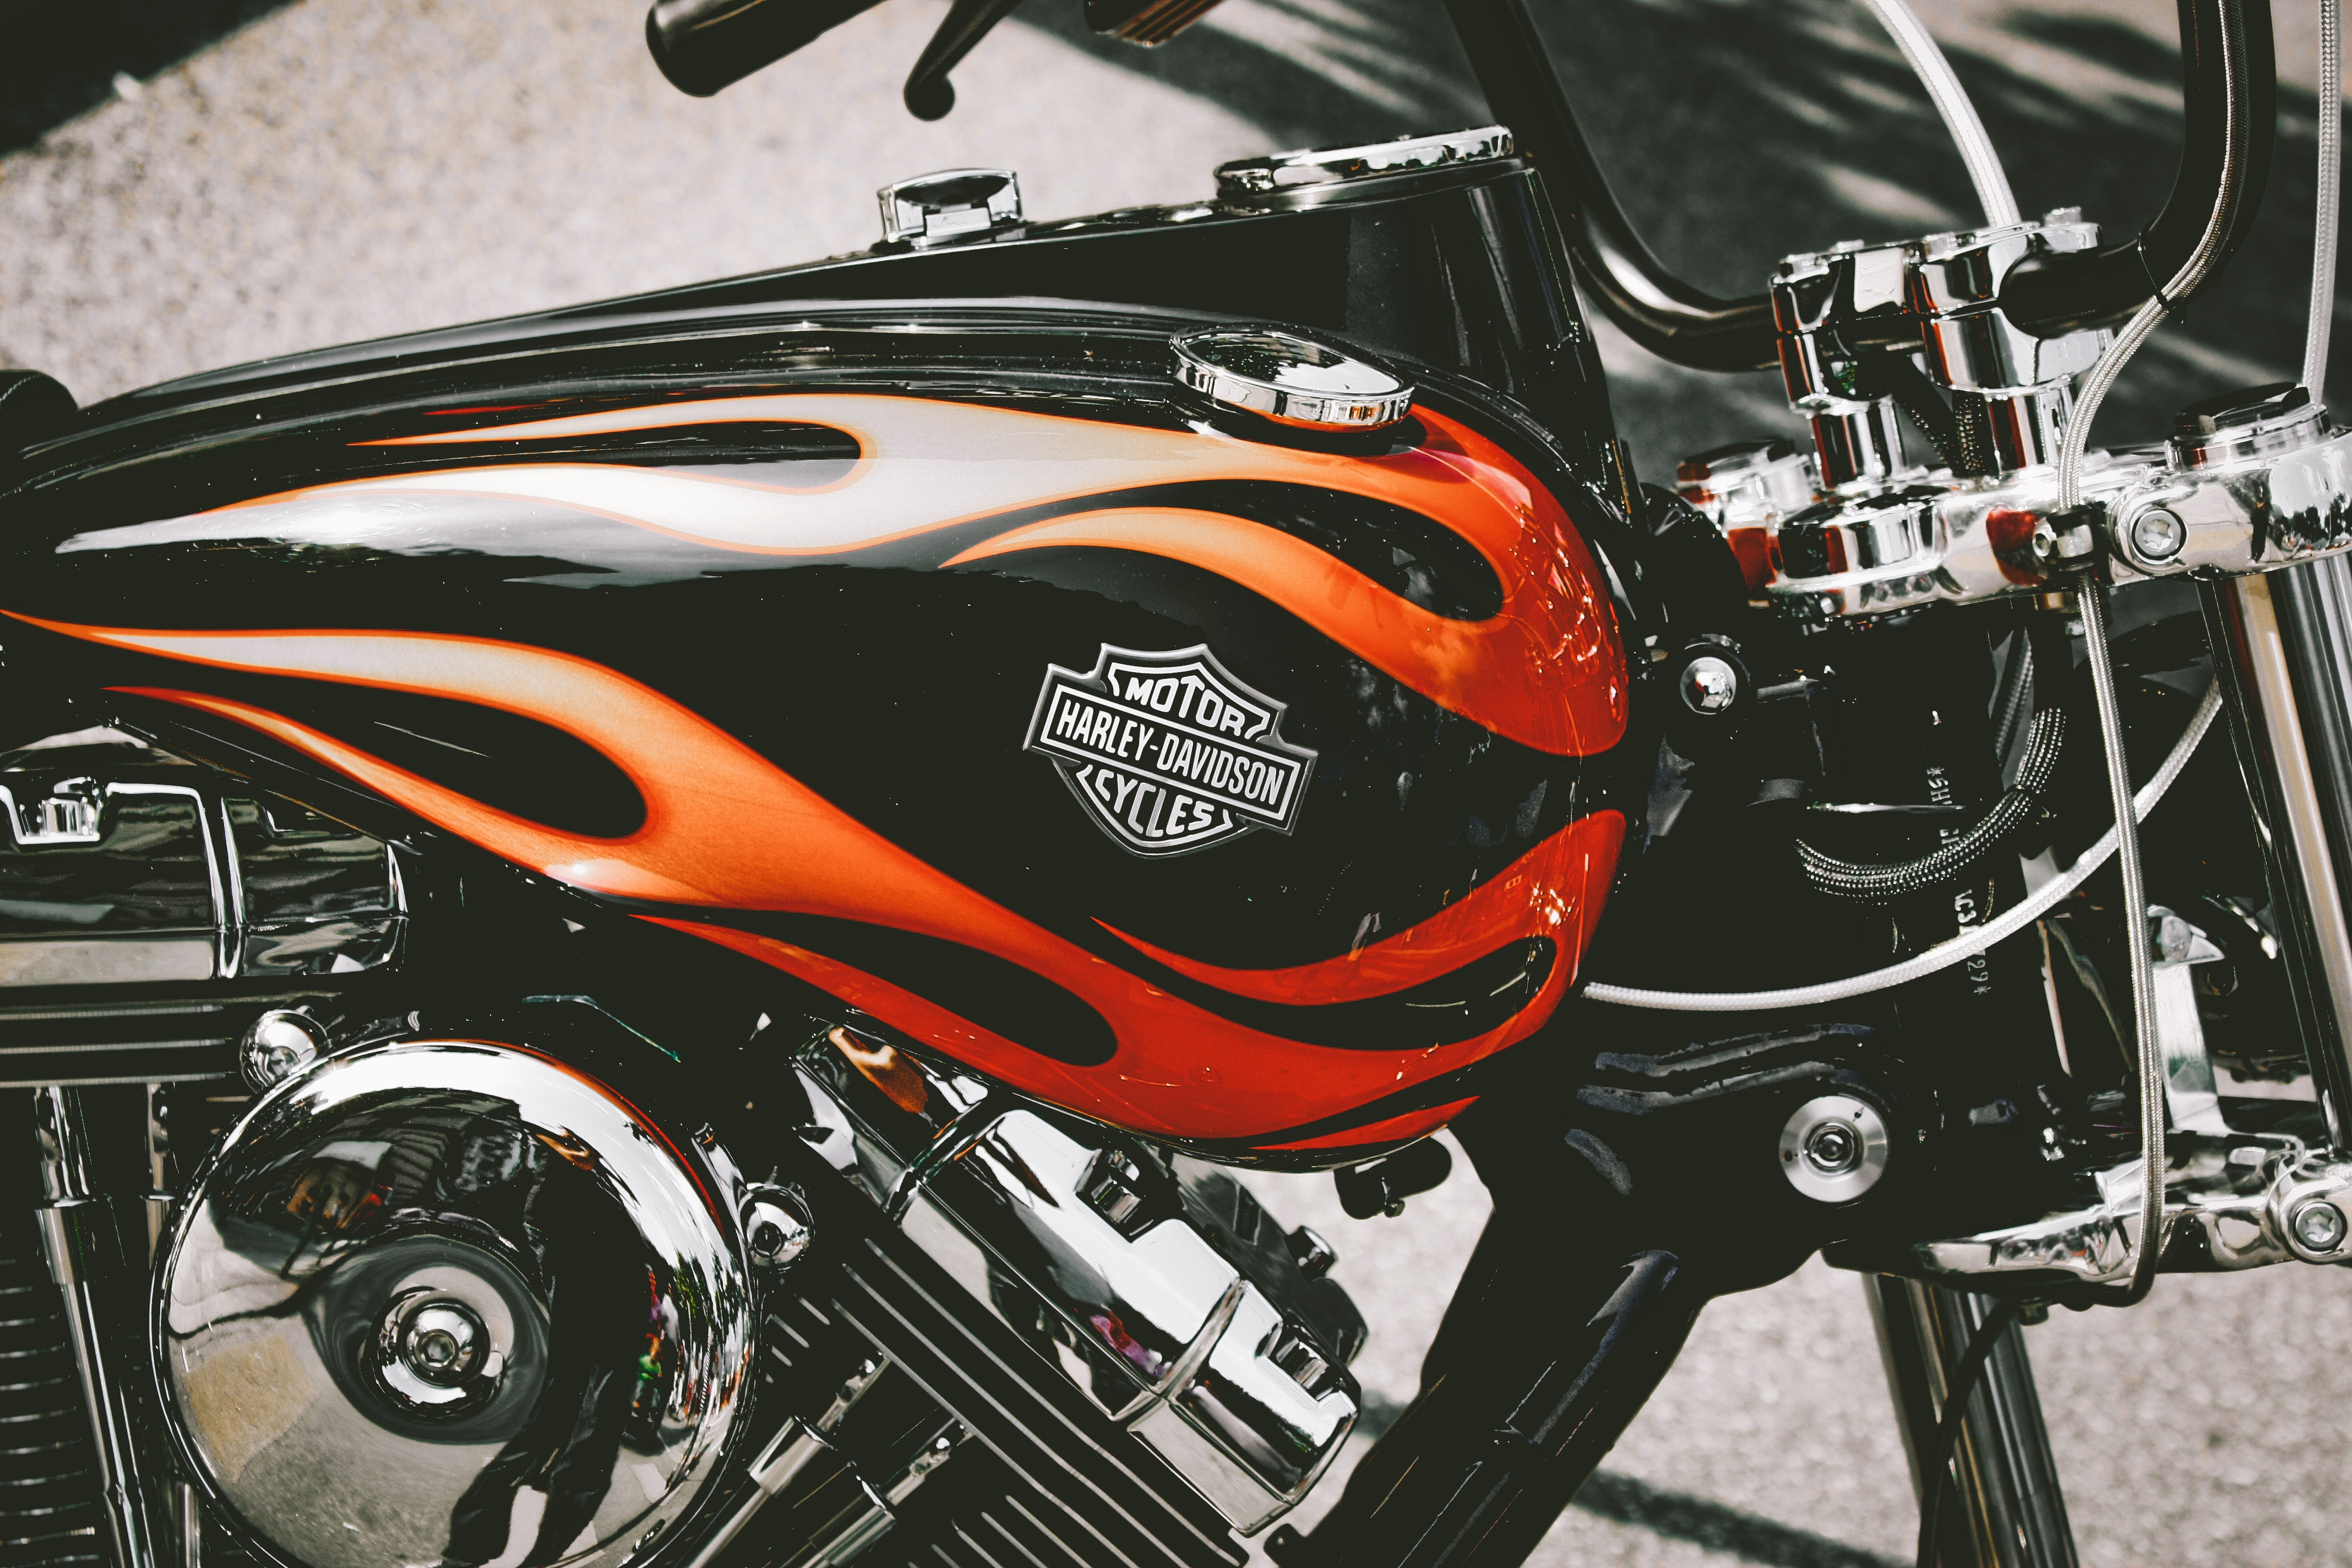 Harley-Davidson: Revving Up its Iconic Brand